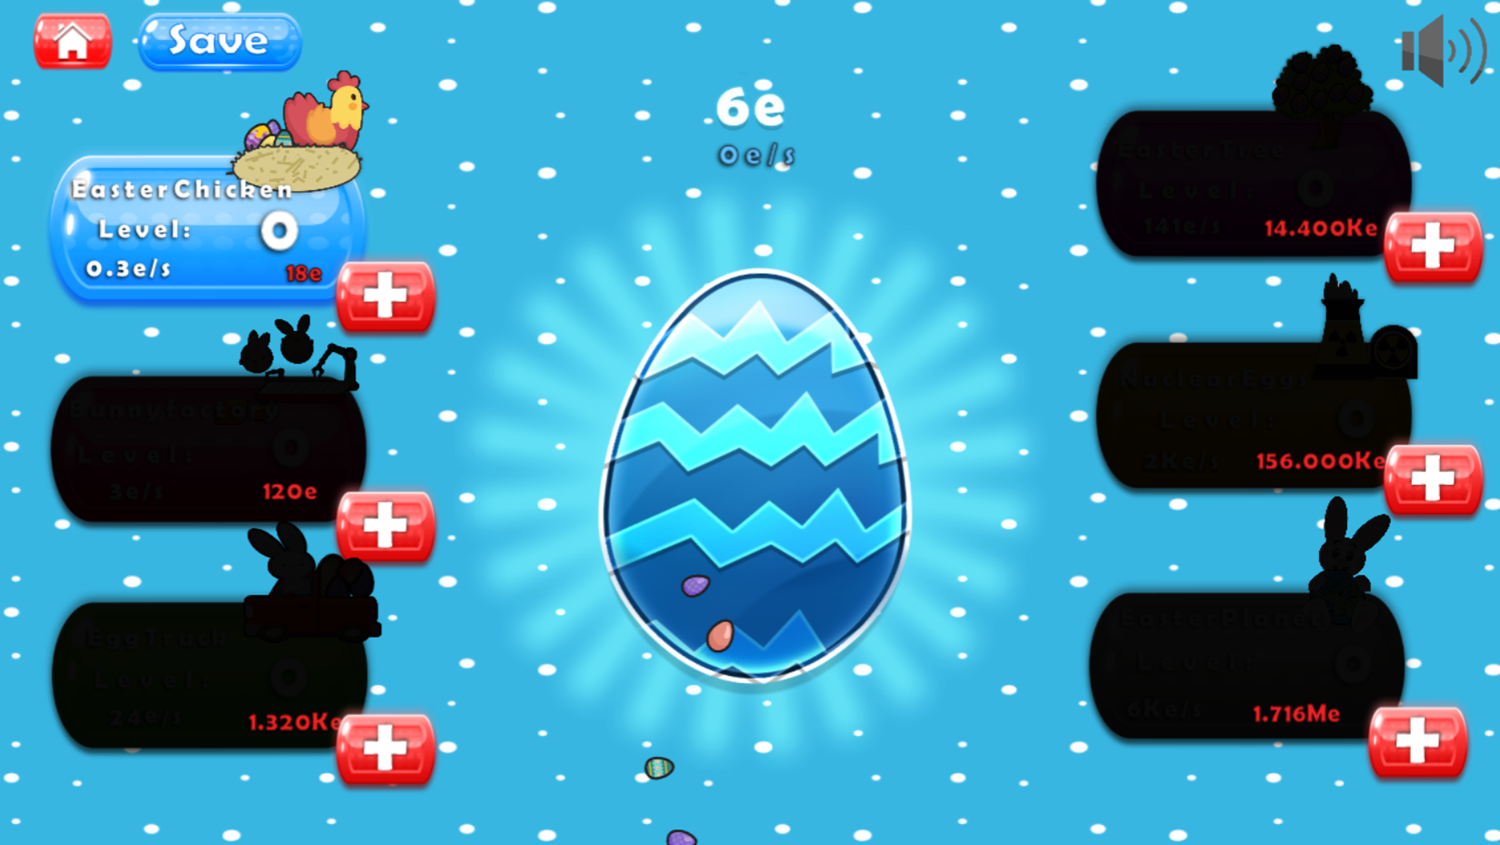 Easter Clicker Game Easter Chicken Unlocked Screenshot.